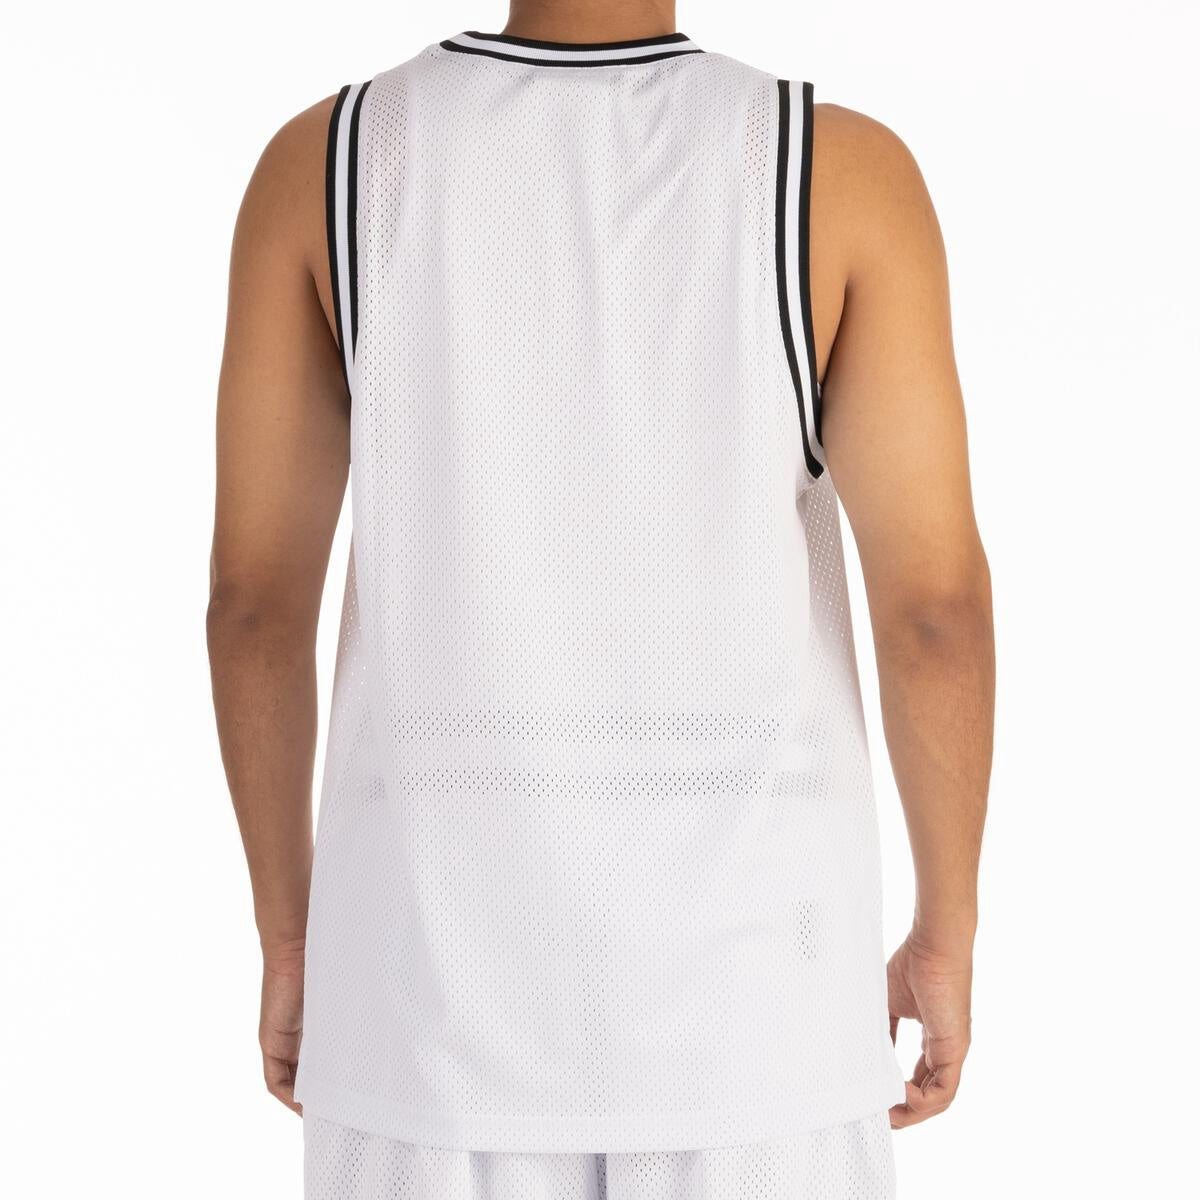 Pro Club Classic Basketball Jersey - White